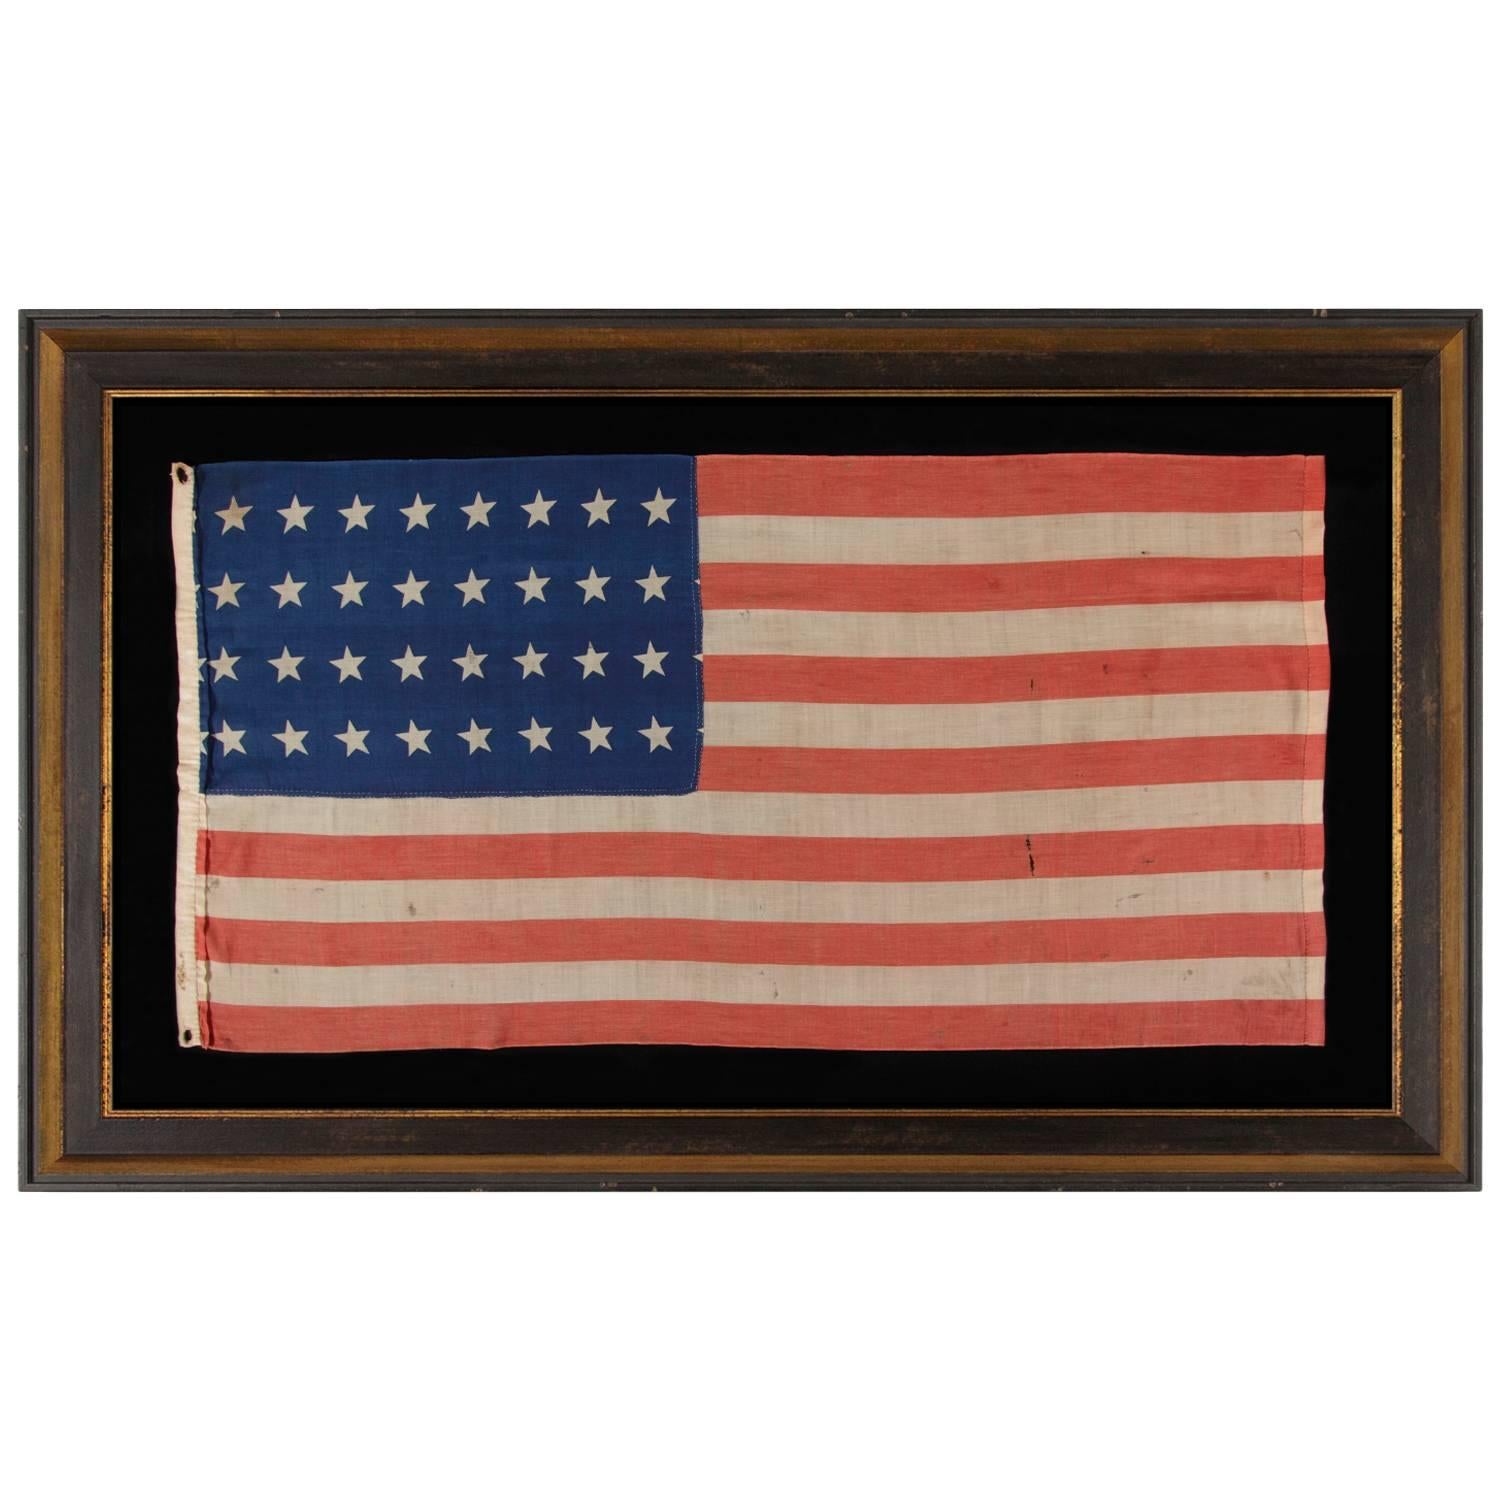 32 Star Antique American Flag, Representing Minnesota Statehood